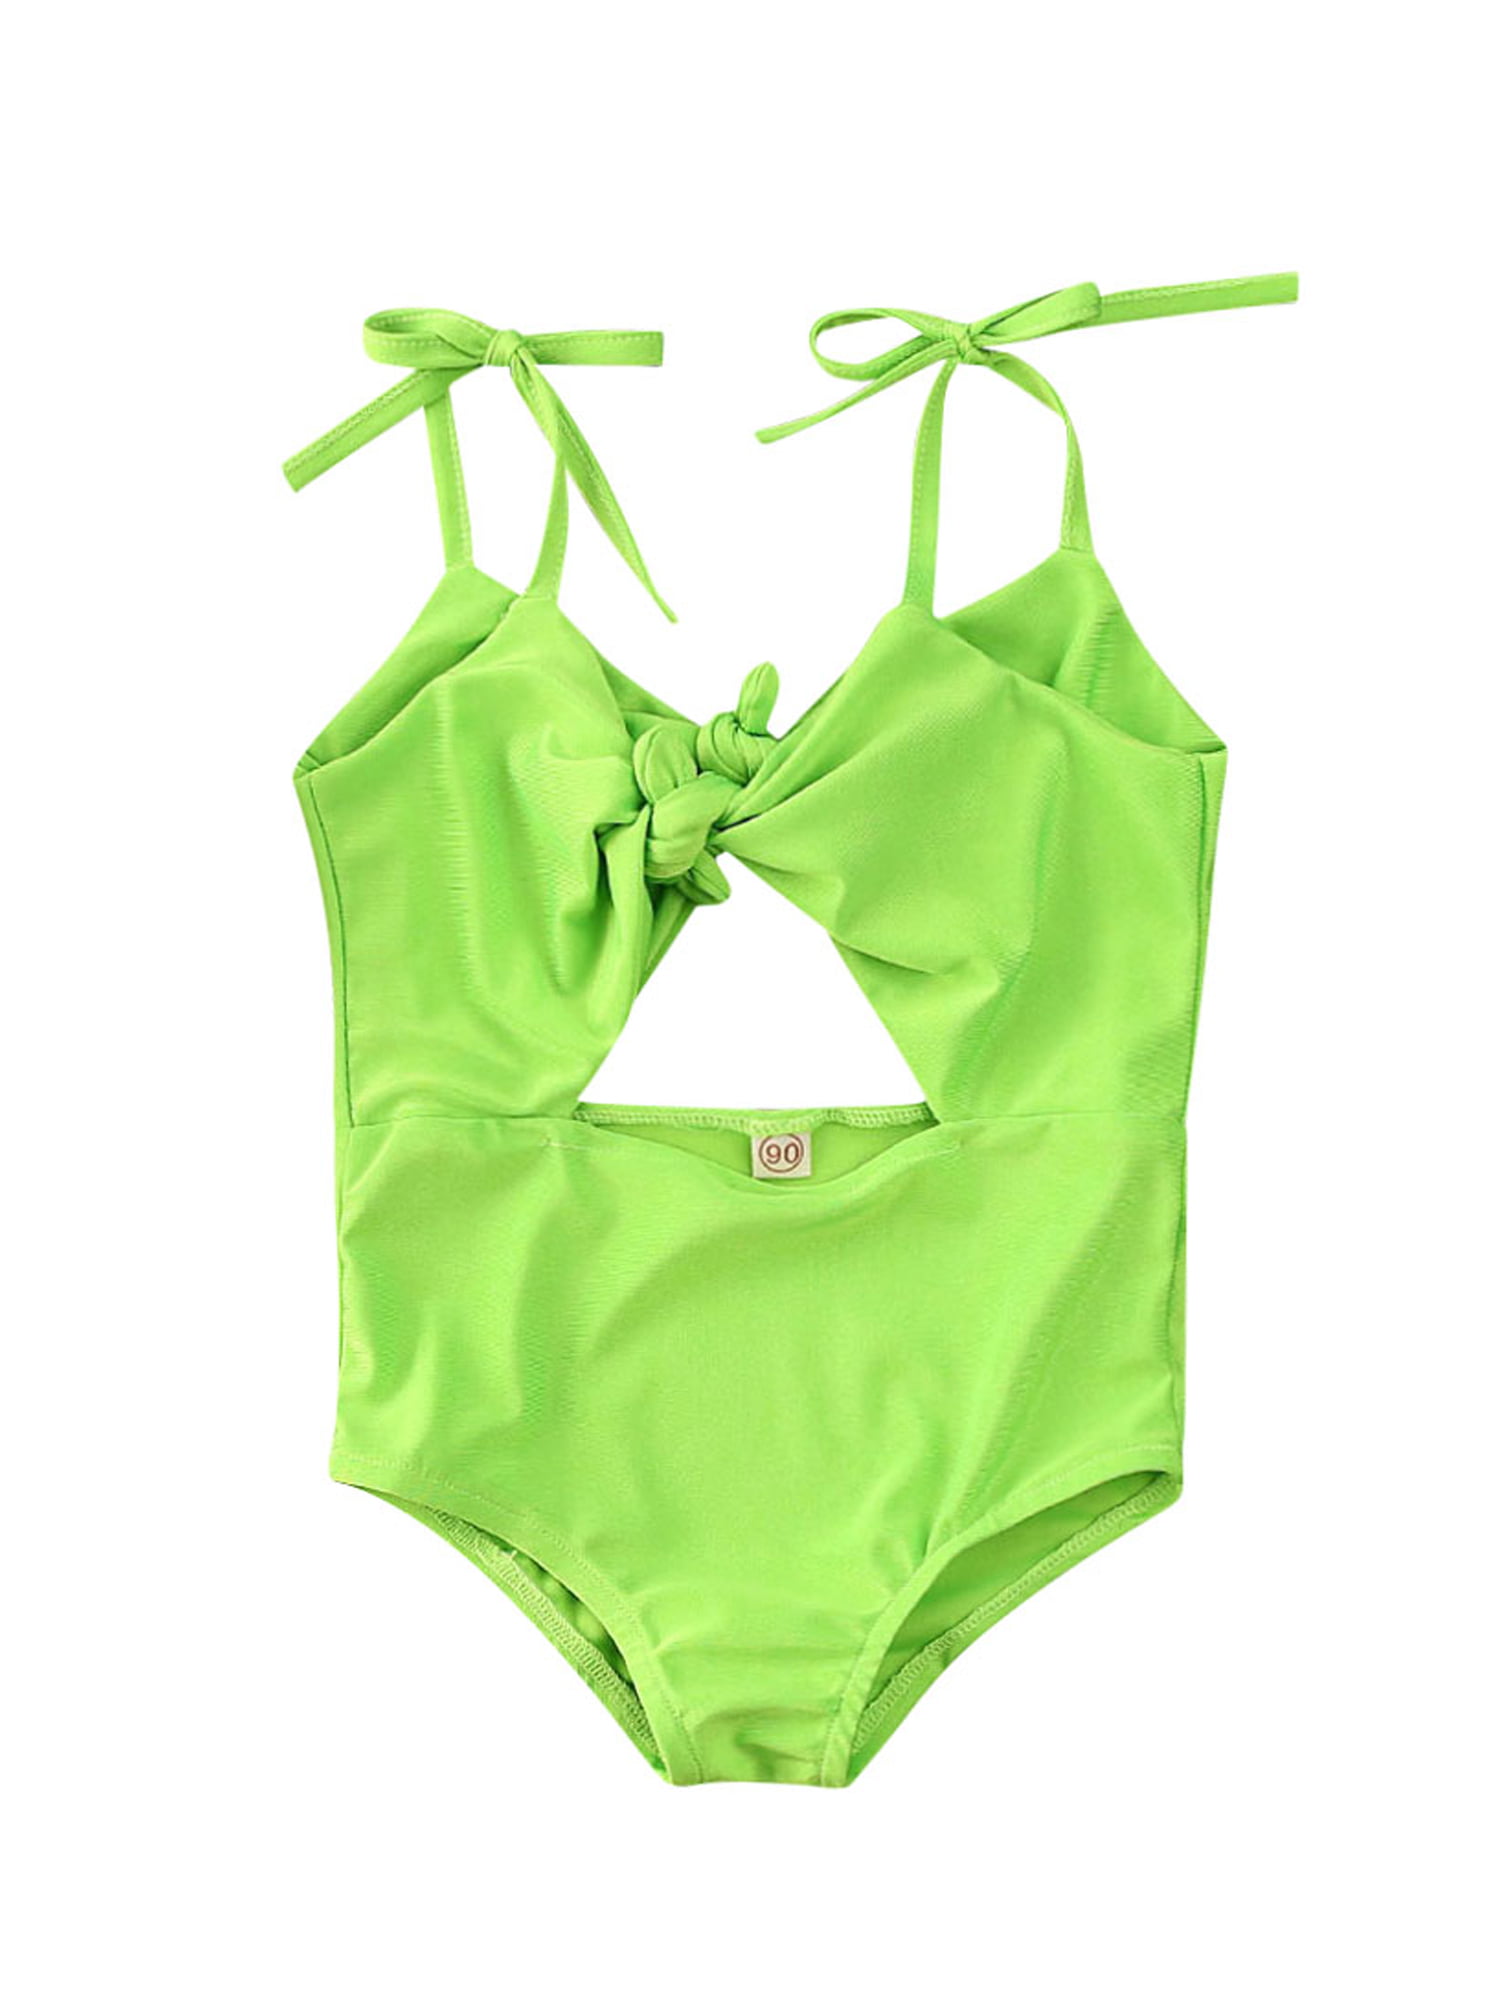 3Pcs/Set Kids Toddler Baby Girl Gold Bowknot Striped Swimsuits Halter Swimwear Bikini Set with Headband